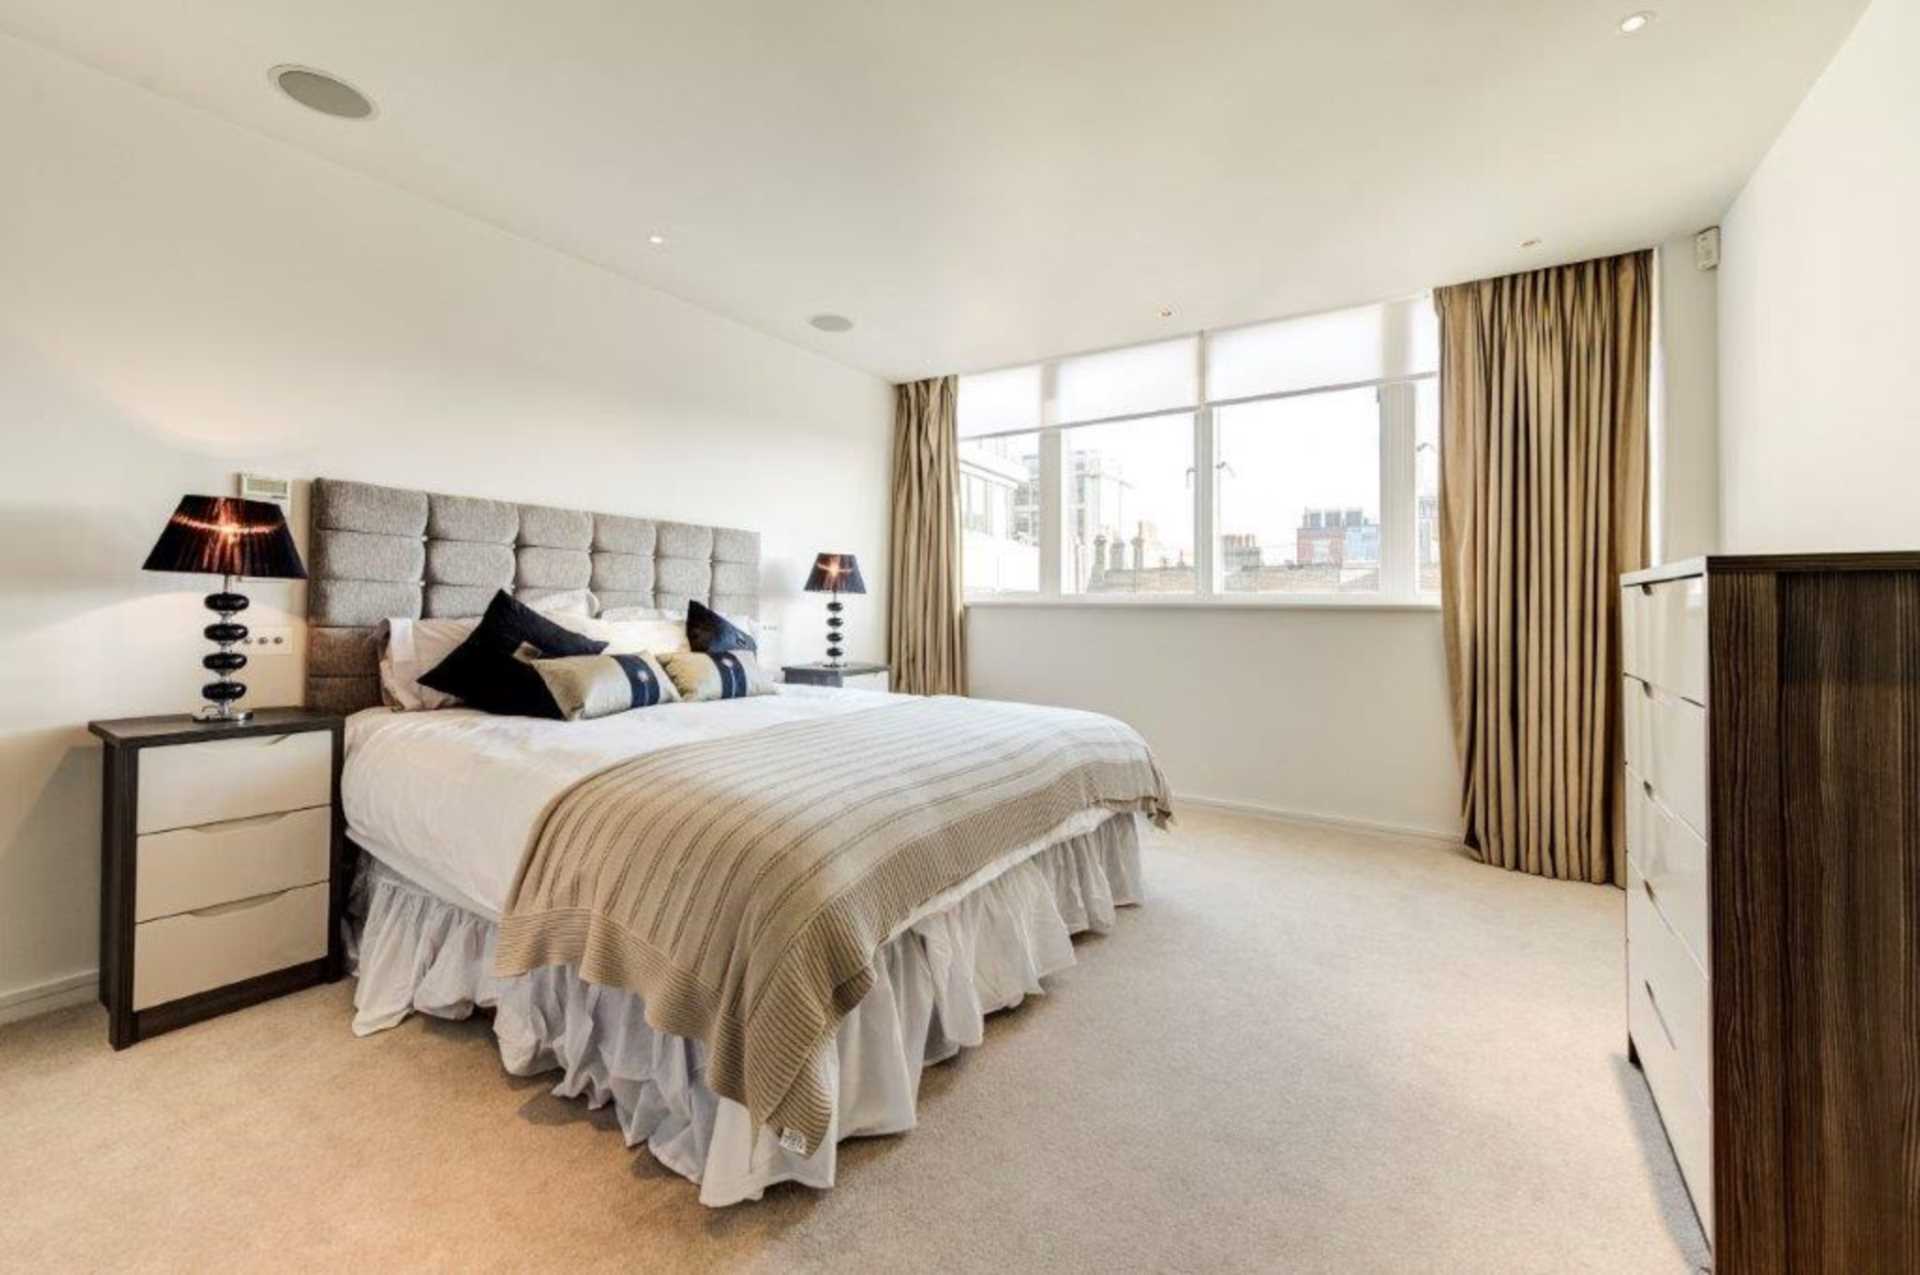 London W8 5EH 1 bed flat rental property internal/external image-4